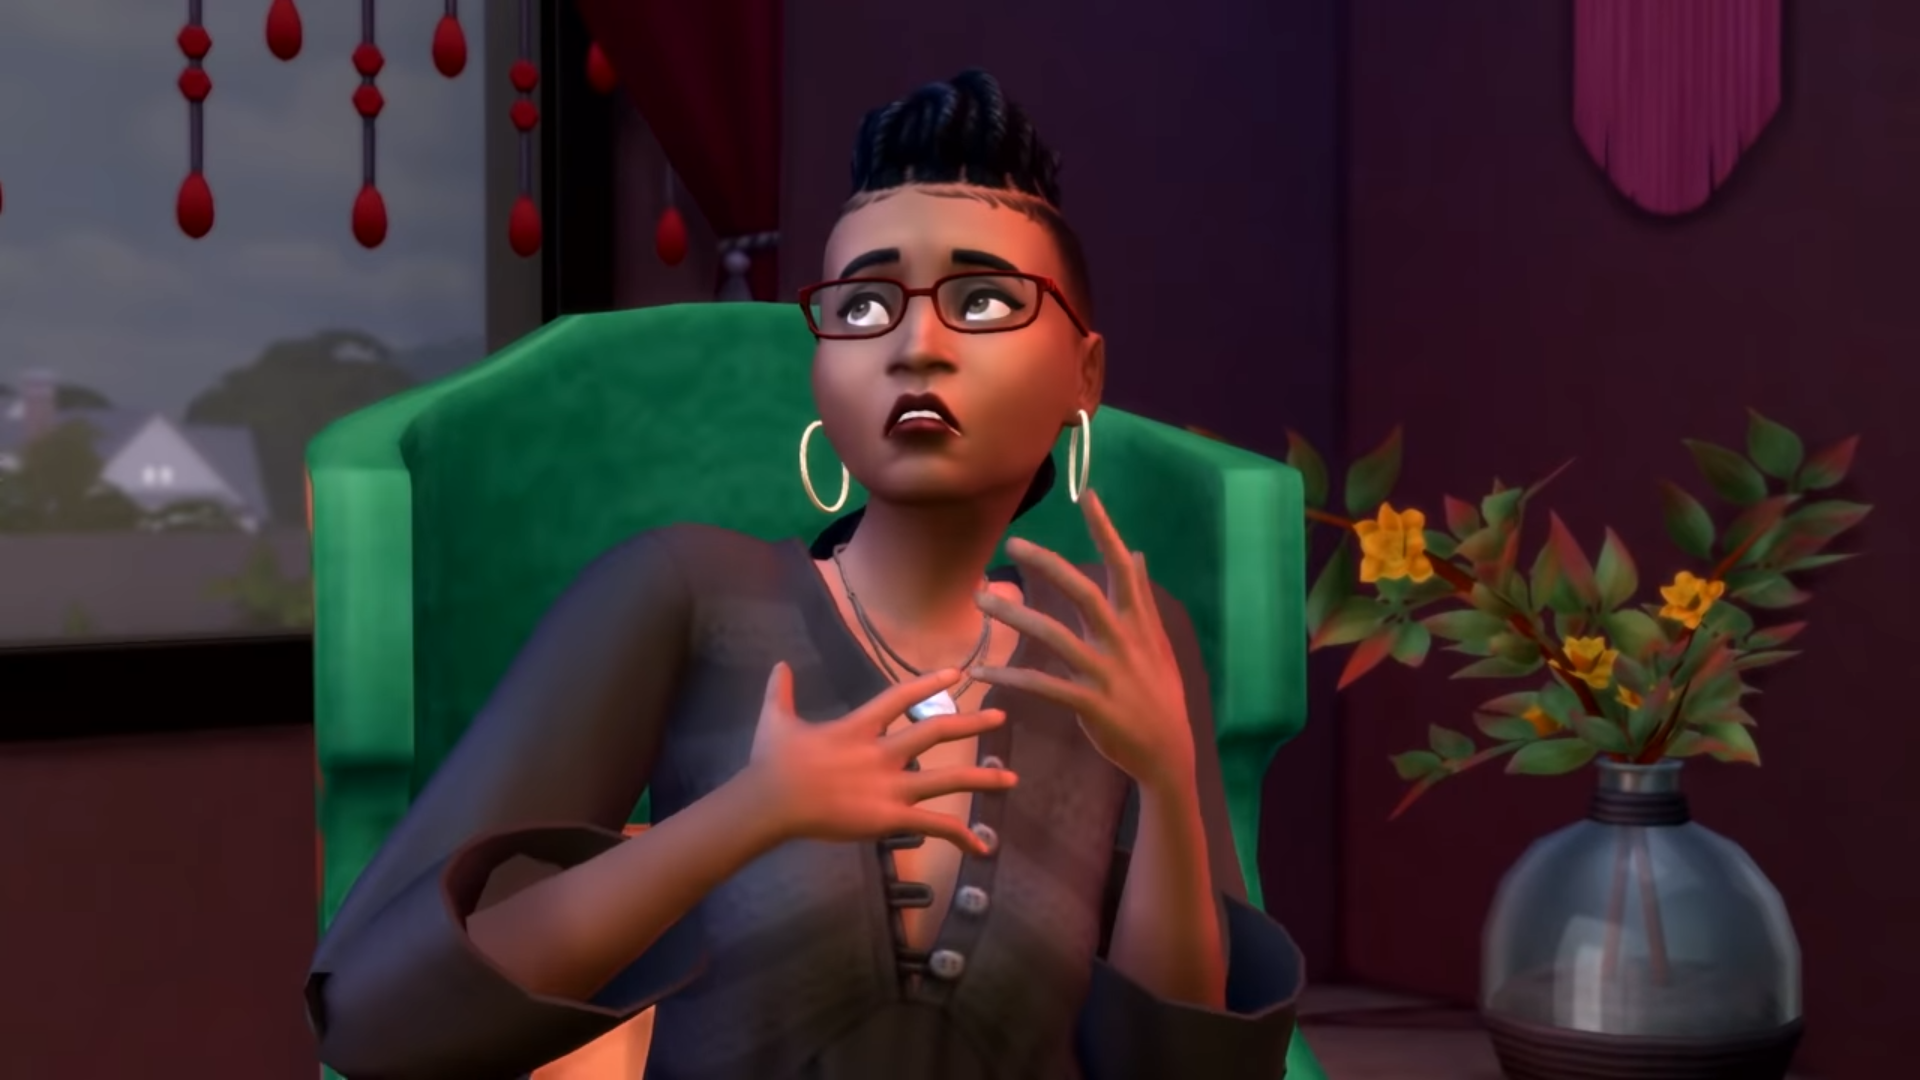 Fan favourite Bonehilda returns in The Sims 4 Paranormal Stuff